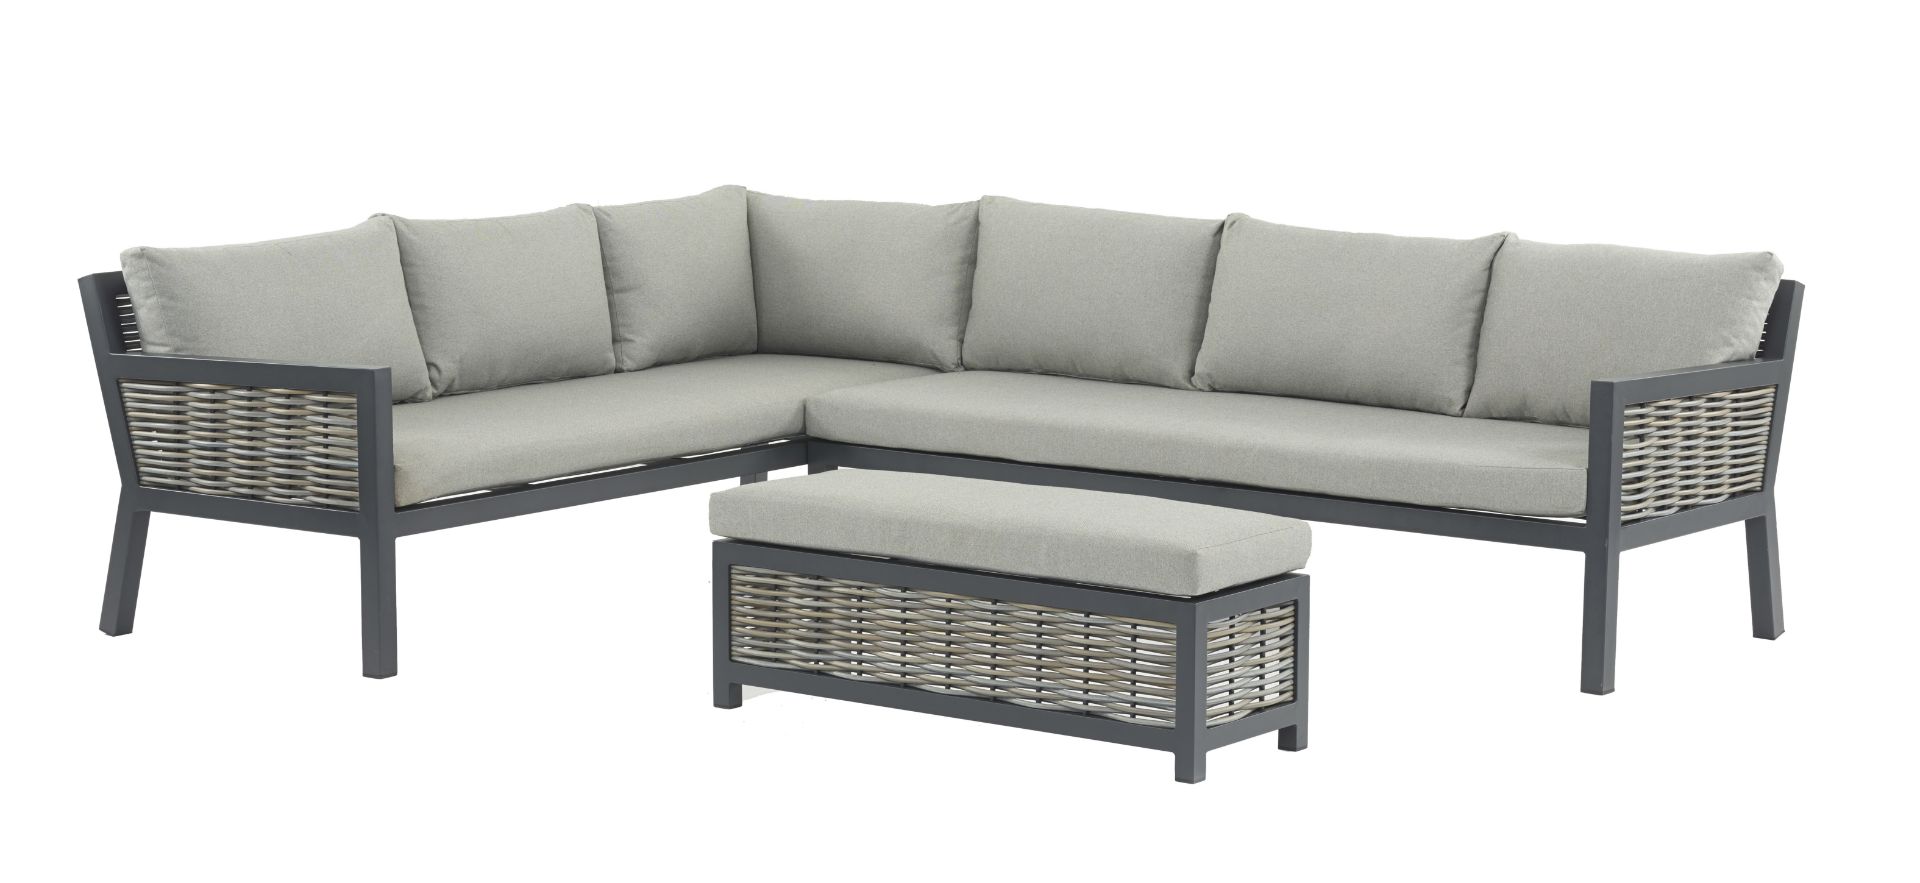 Set A396 Portofino Wicker Rectangle Modular Sofa & Bench - Long Right